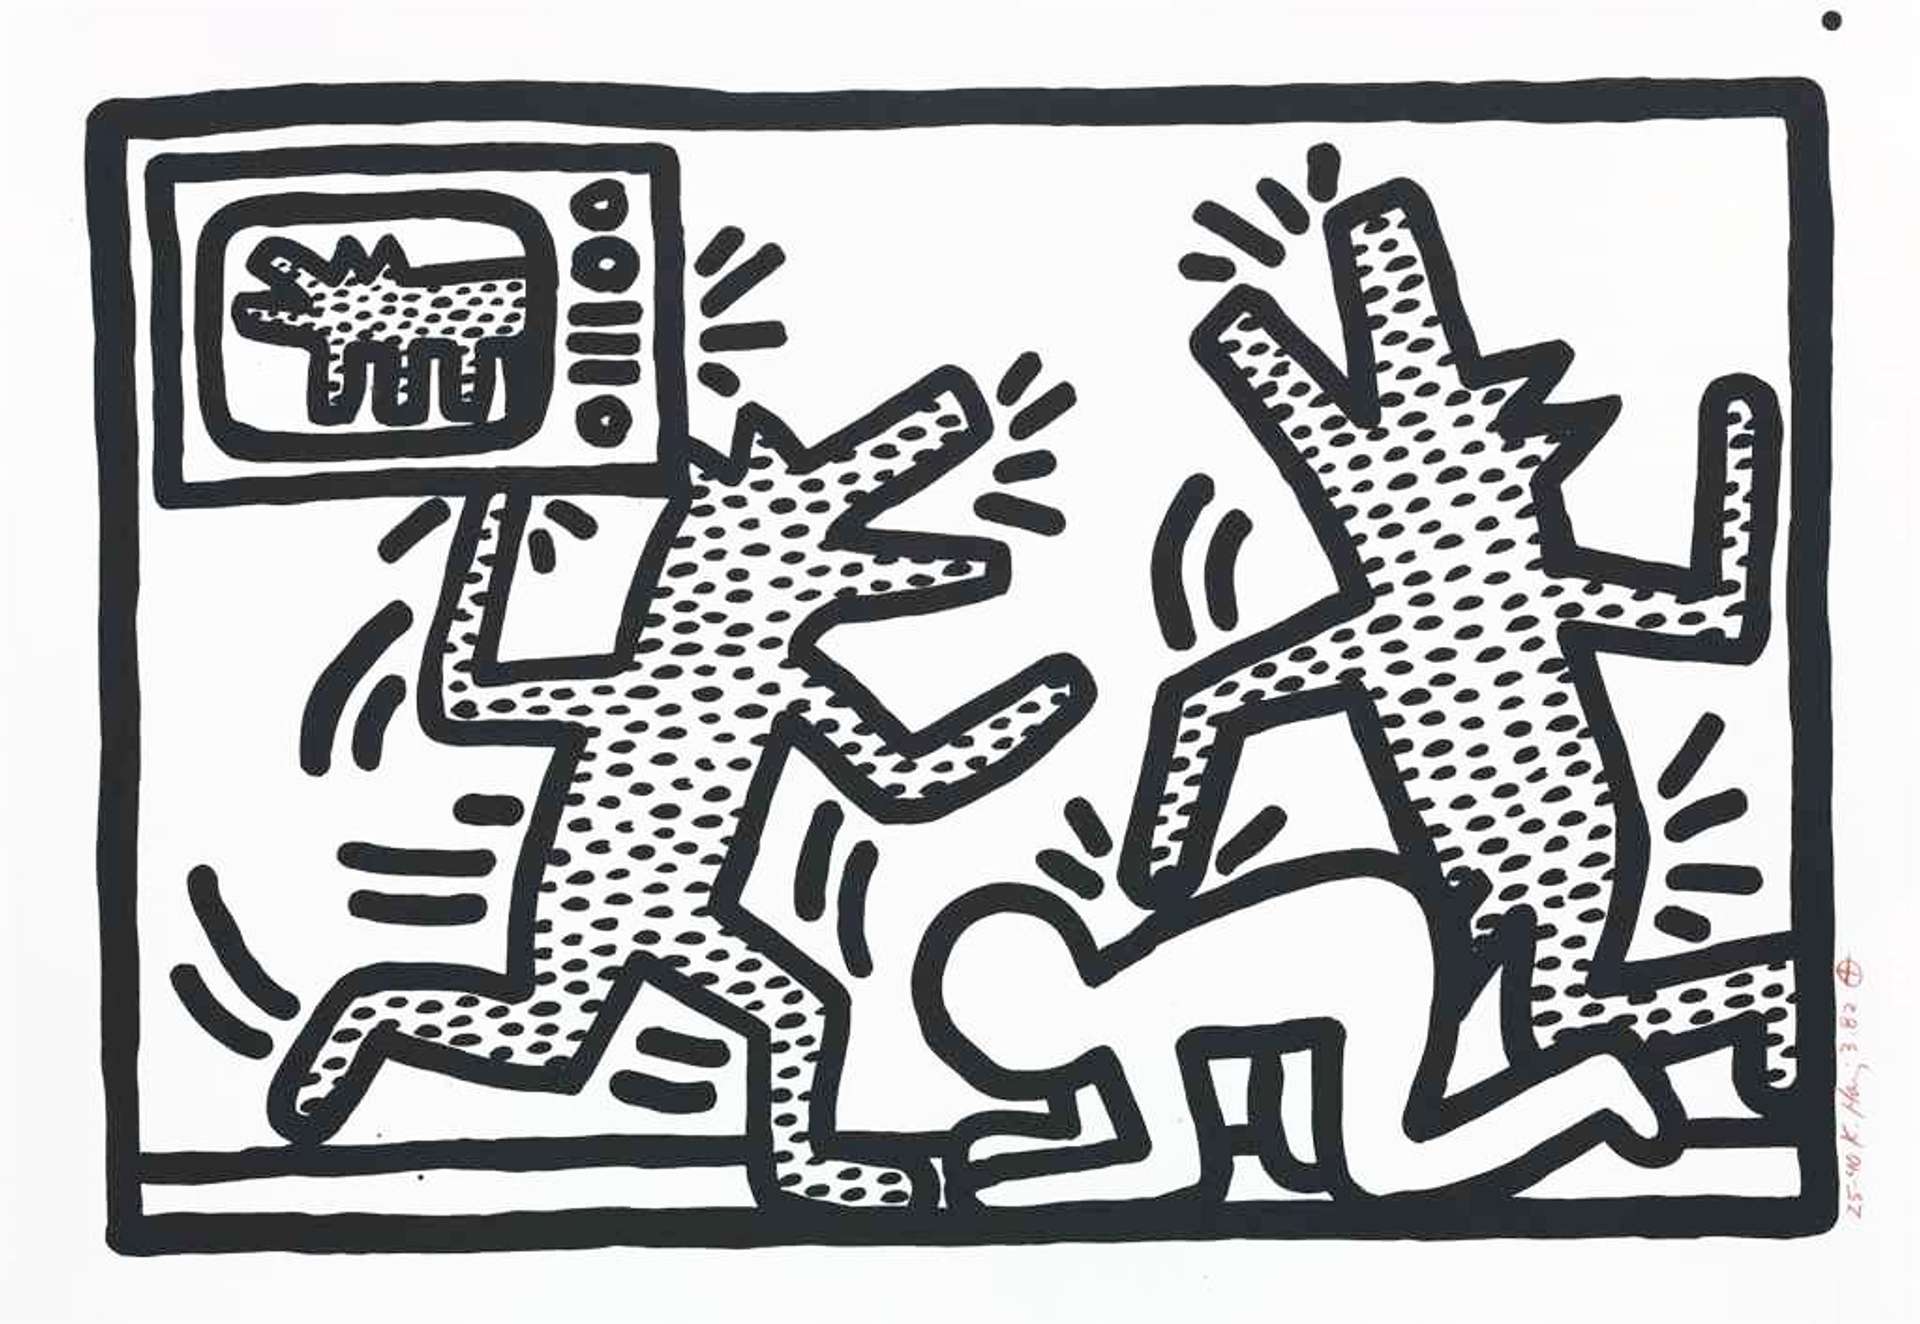 Plate II, Untitled 1 - 6 by Keith Haring - MyArtBroker 